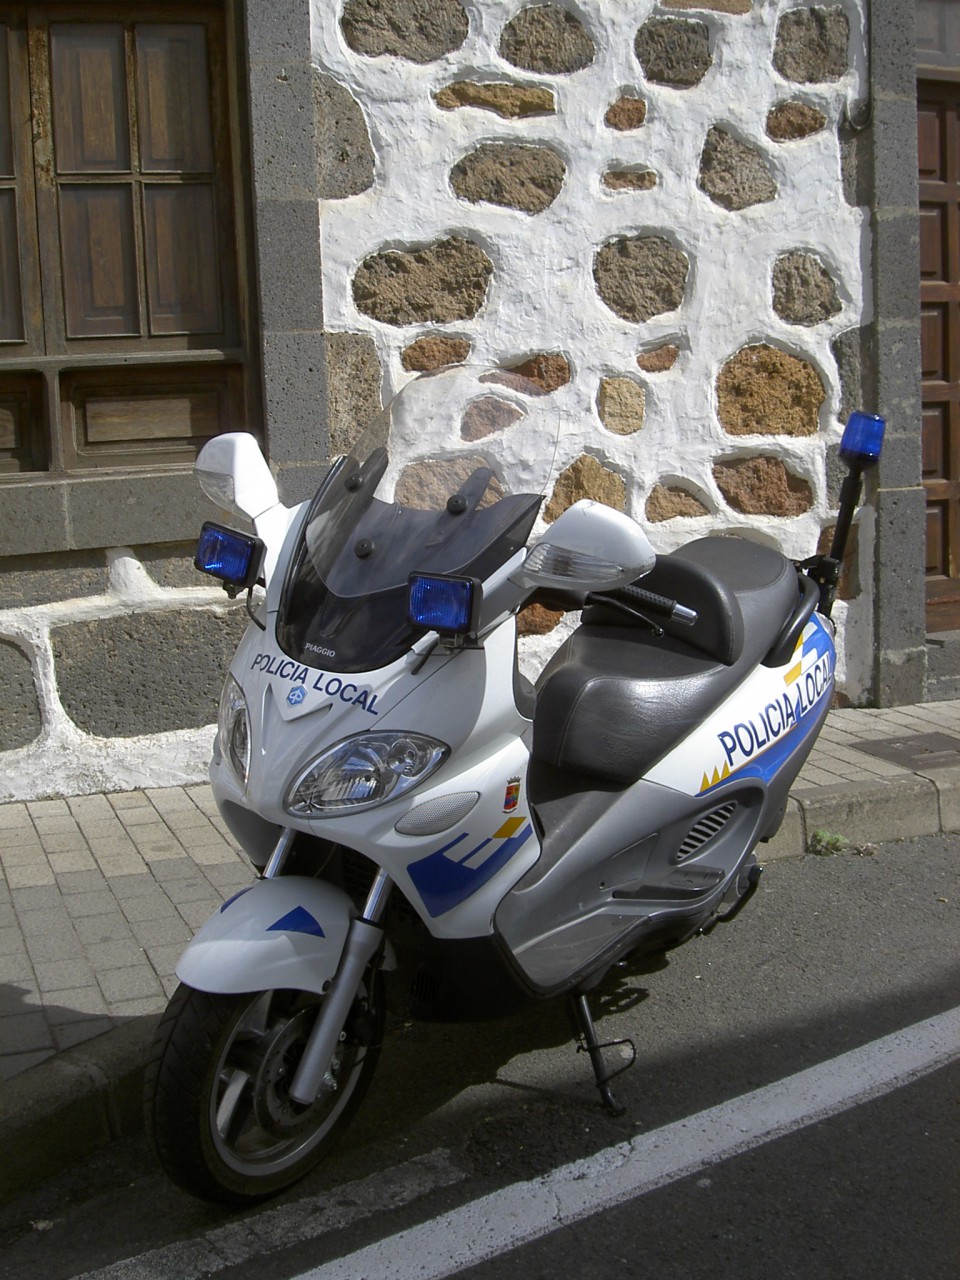 030 Piaggio Roller Lokale Polizei Gran Canaria.JPG